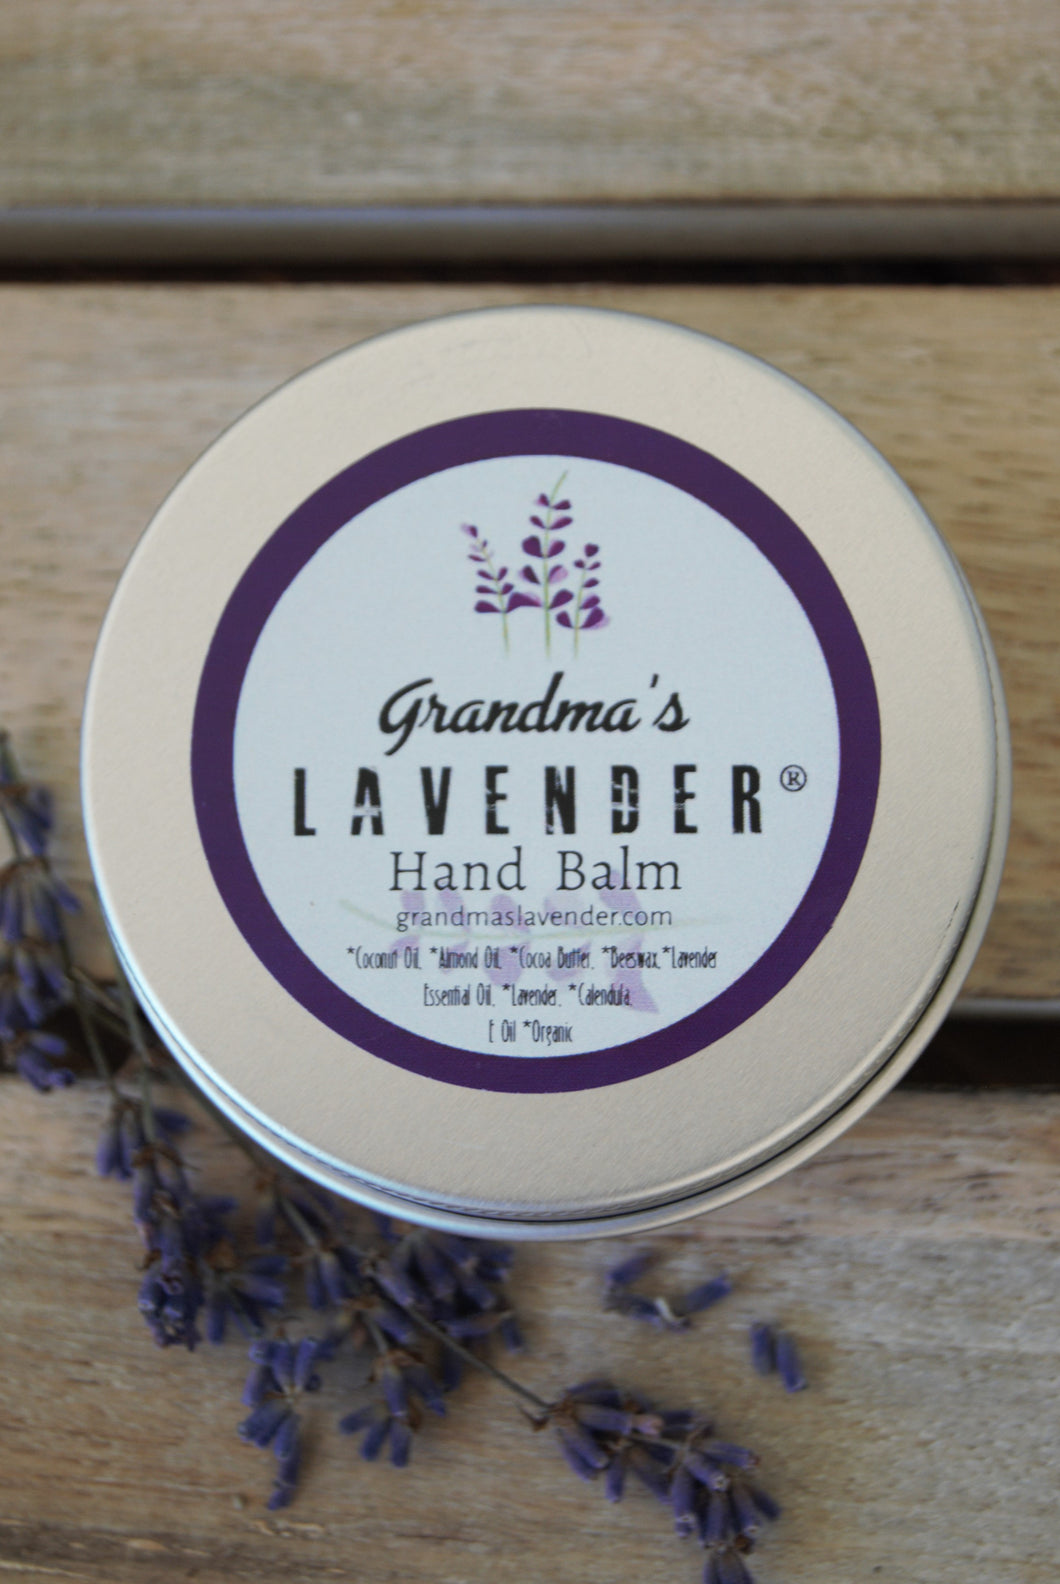 Hand Balm - Grandma's Lavender